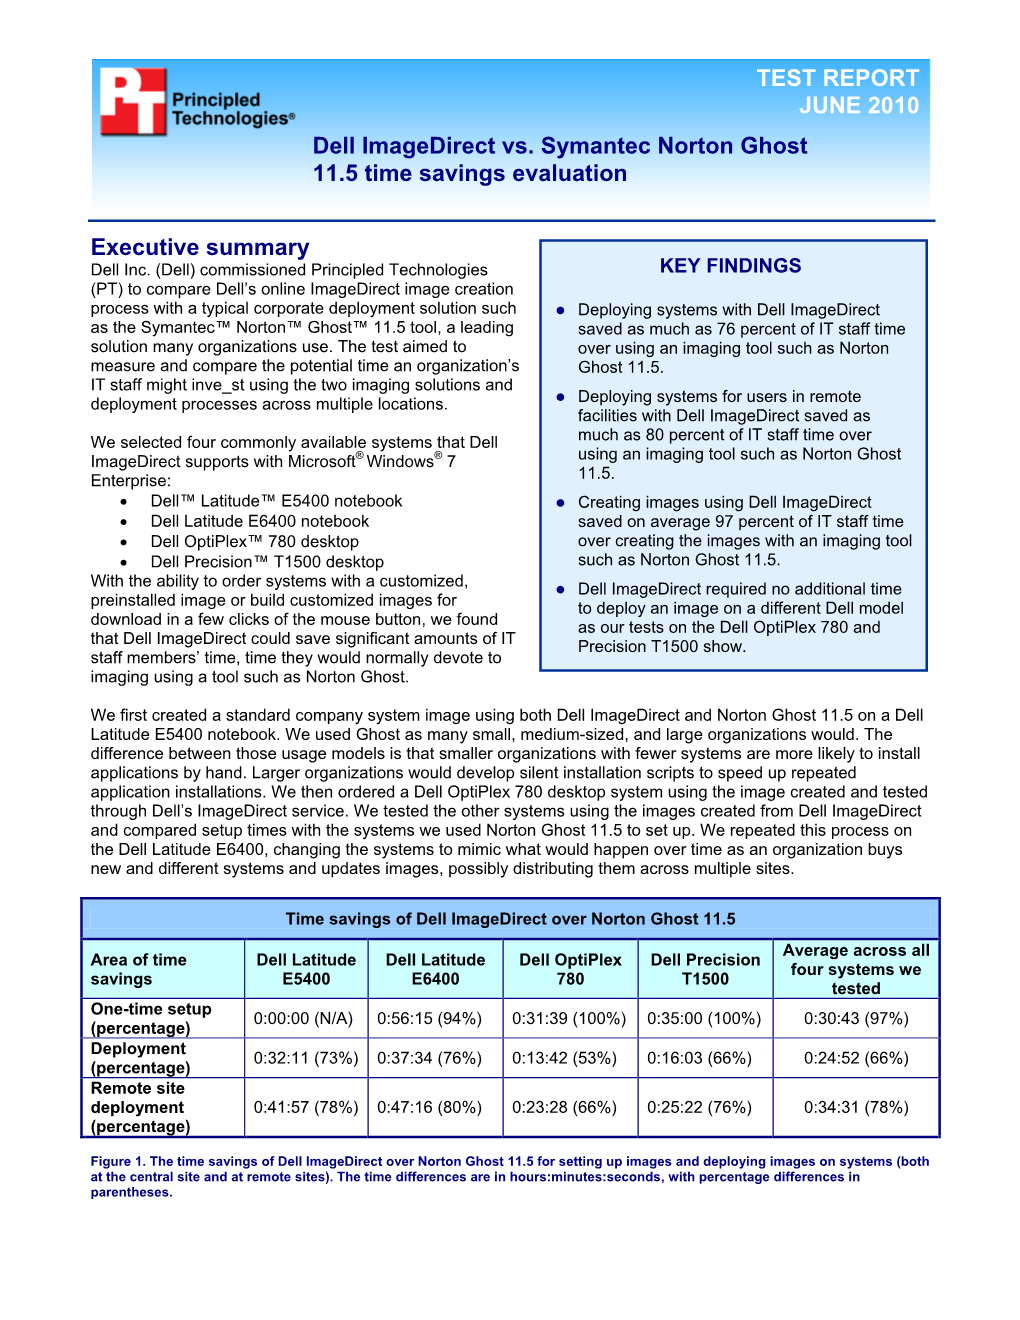 Dell Imagedirect Vs. Symantec Norton Ghost 11.5 Time Savings Evaluation